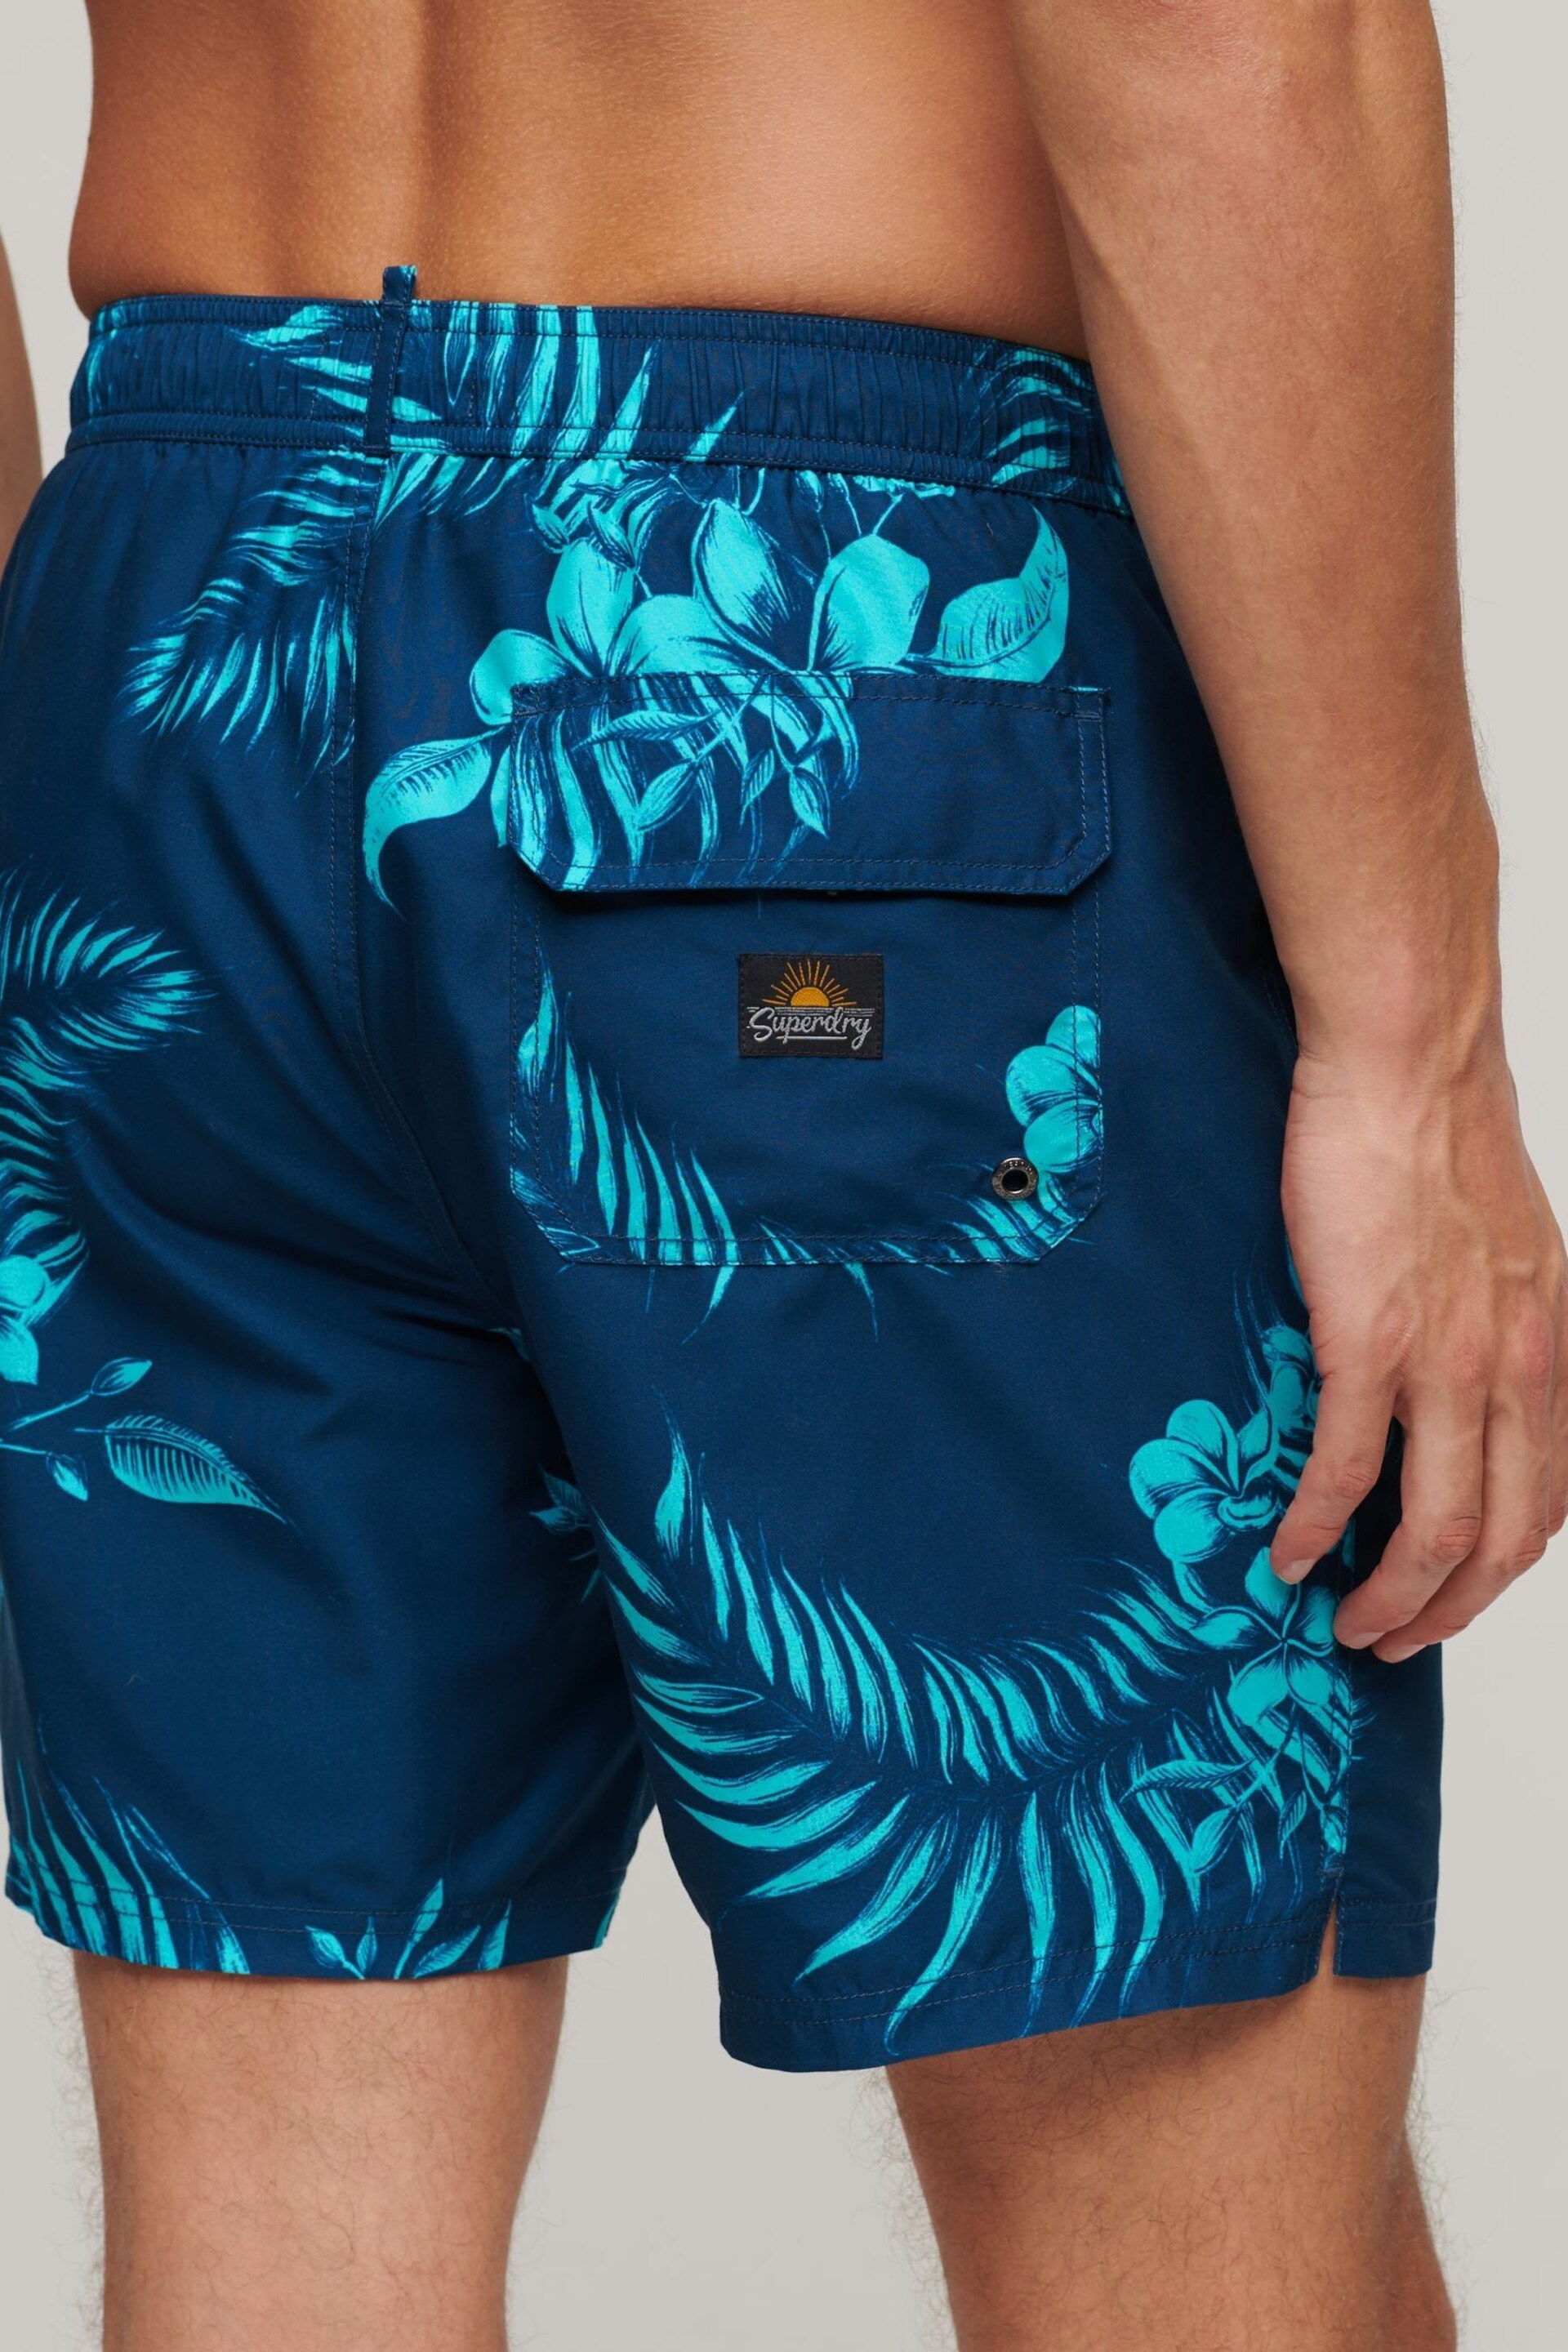 Superdry Blue Hawaiian Print 17 Swim Shorts - Image 3 of 6